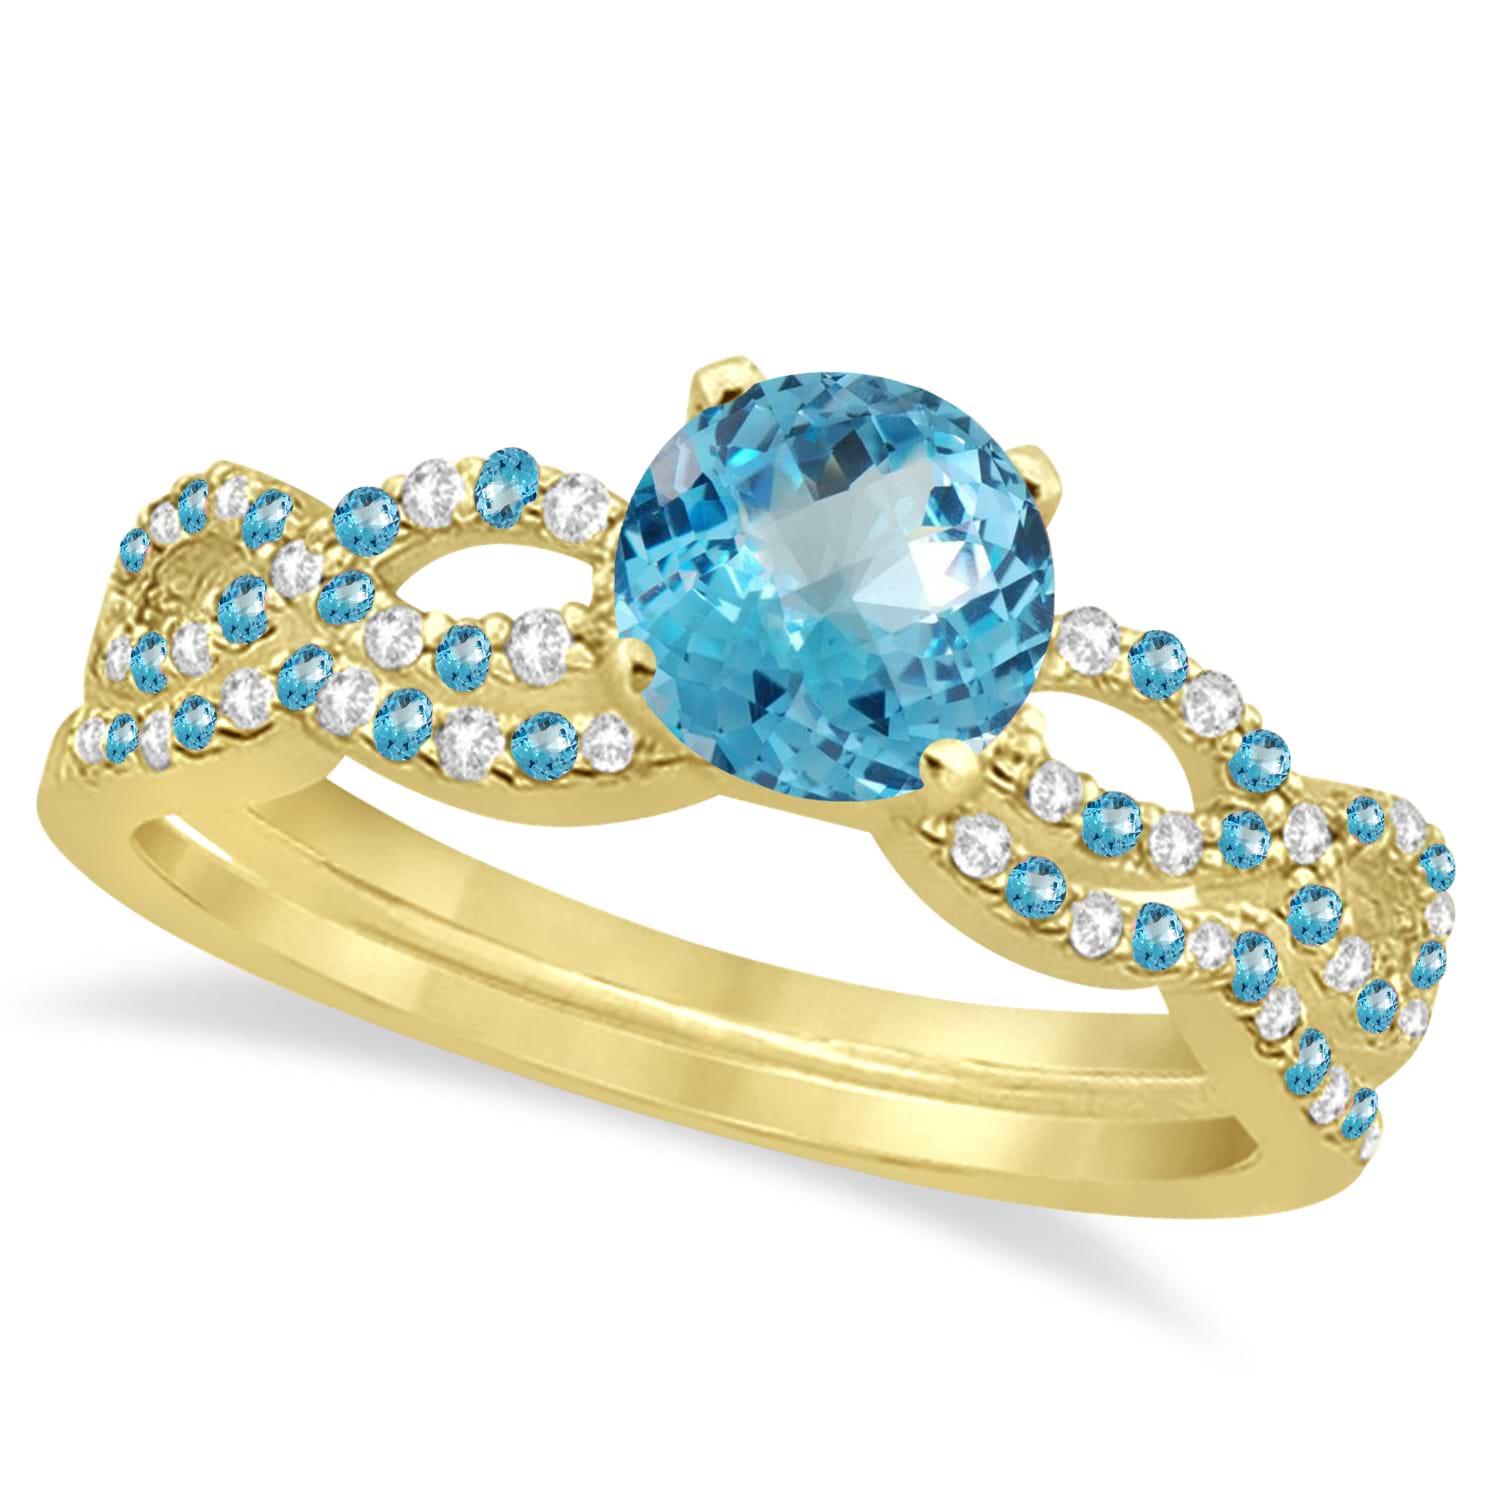 Blue Topaz & Diamond Infinity Style Bridal Set 14k Yellow Gold 1.69ct